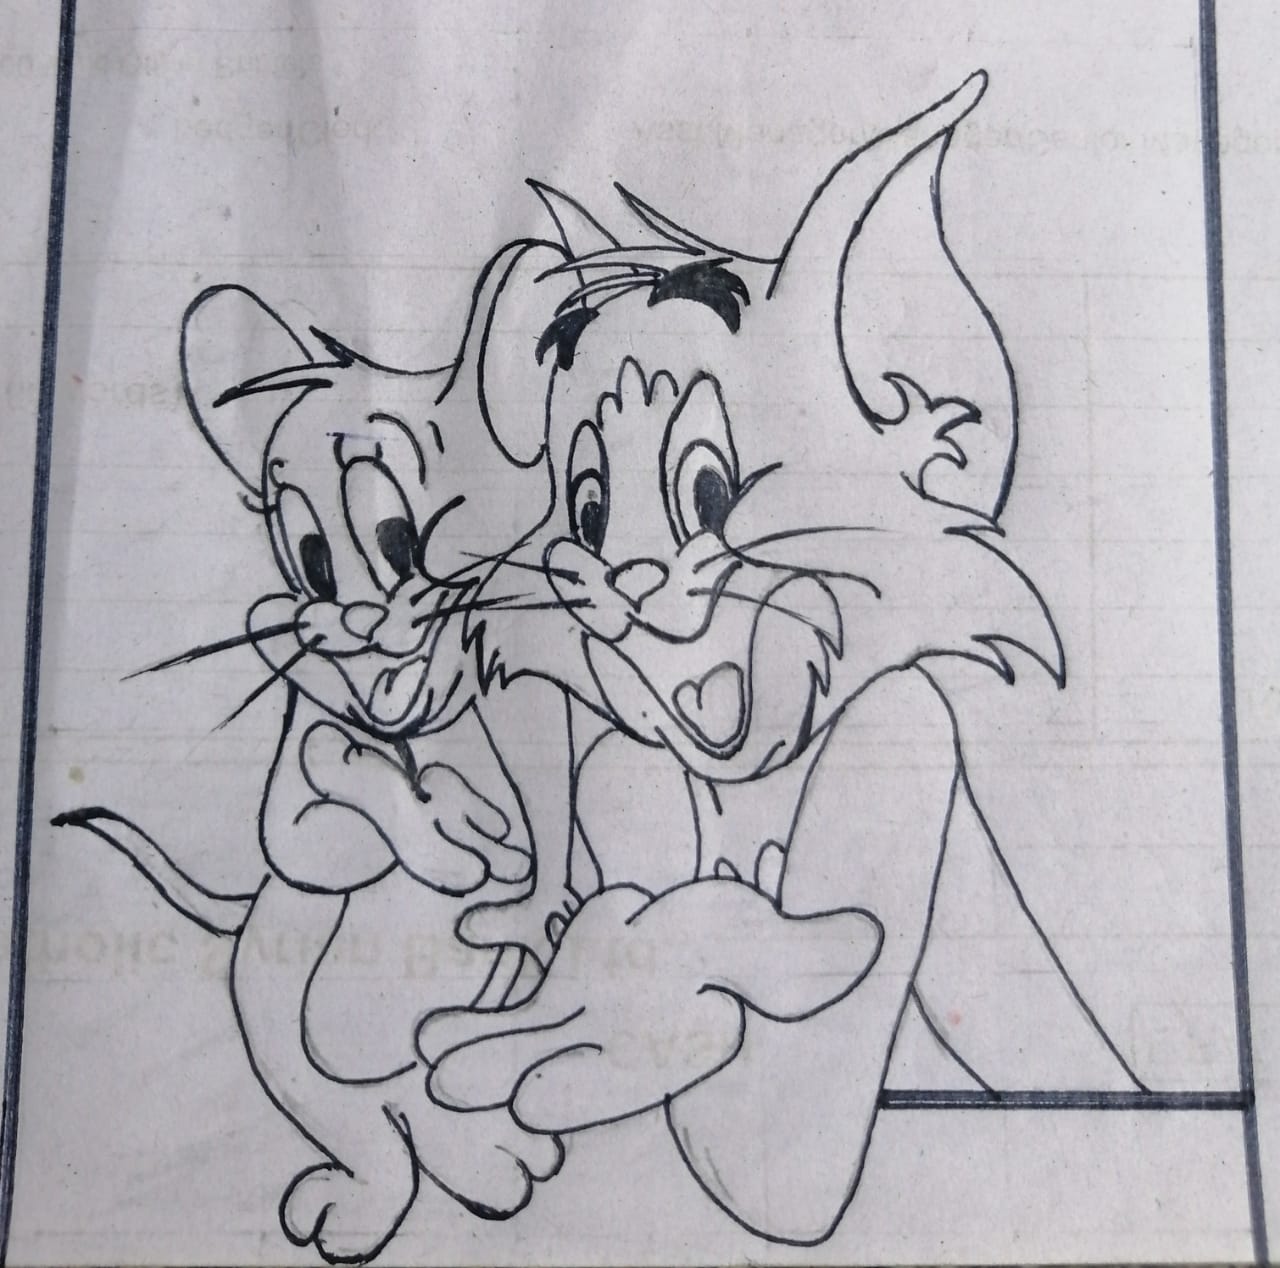 Aman Bhardwaj17 - Tom and Jerry Drawing | Facebook